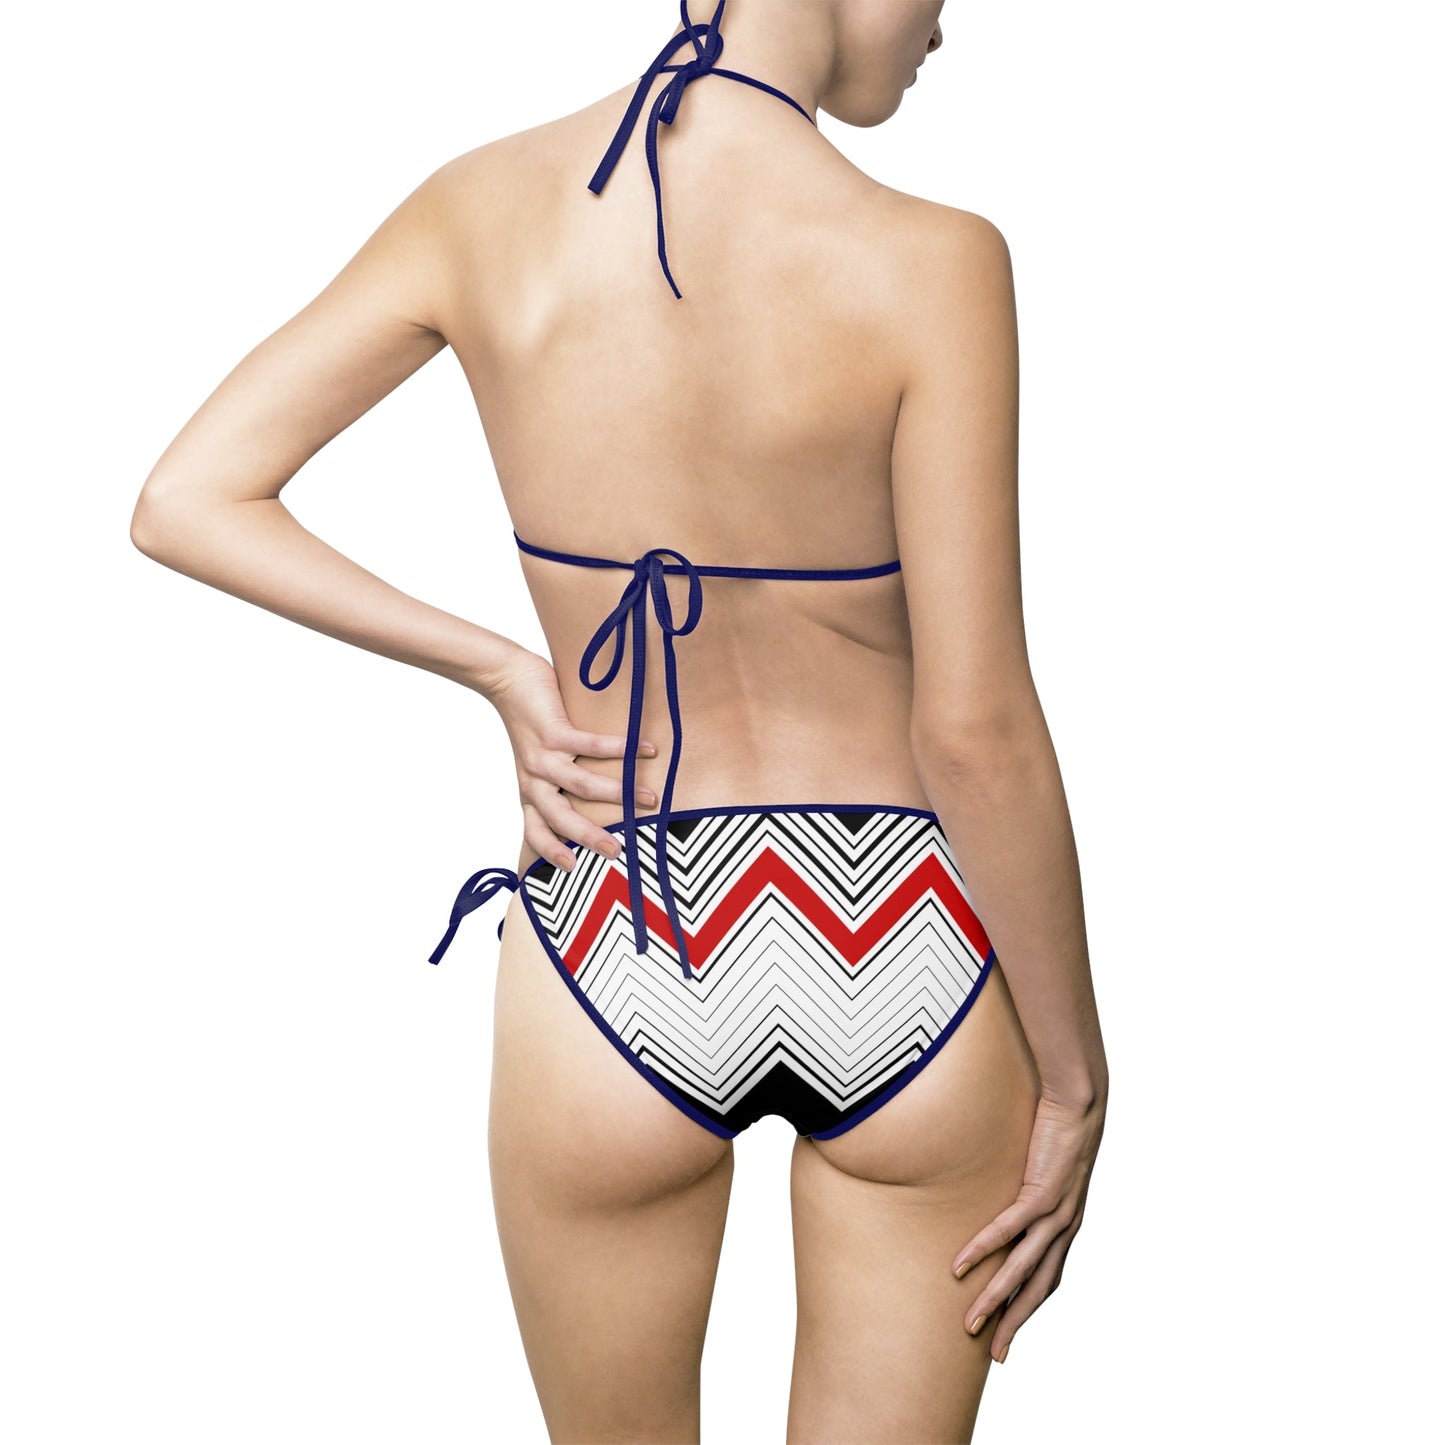 All Over Prints - ZigZag Women's Bikini Swimsuit